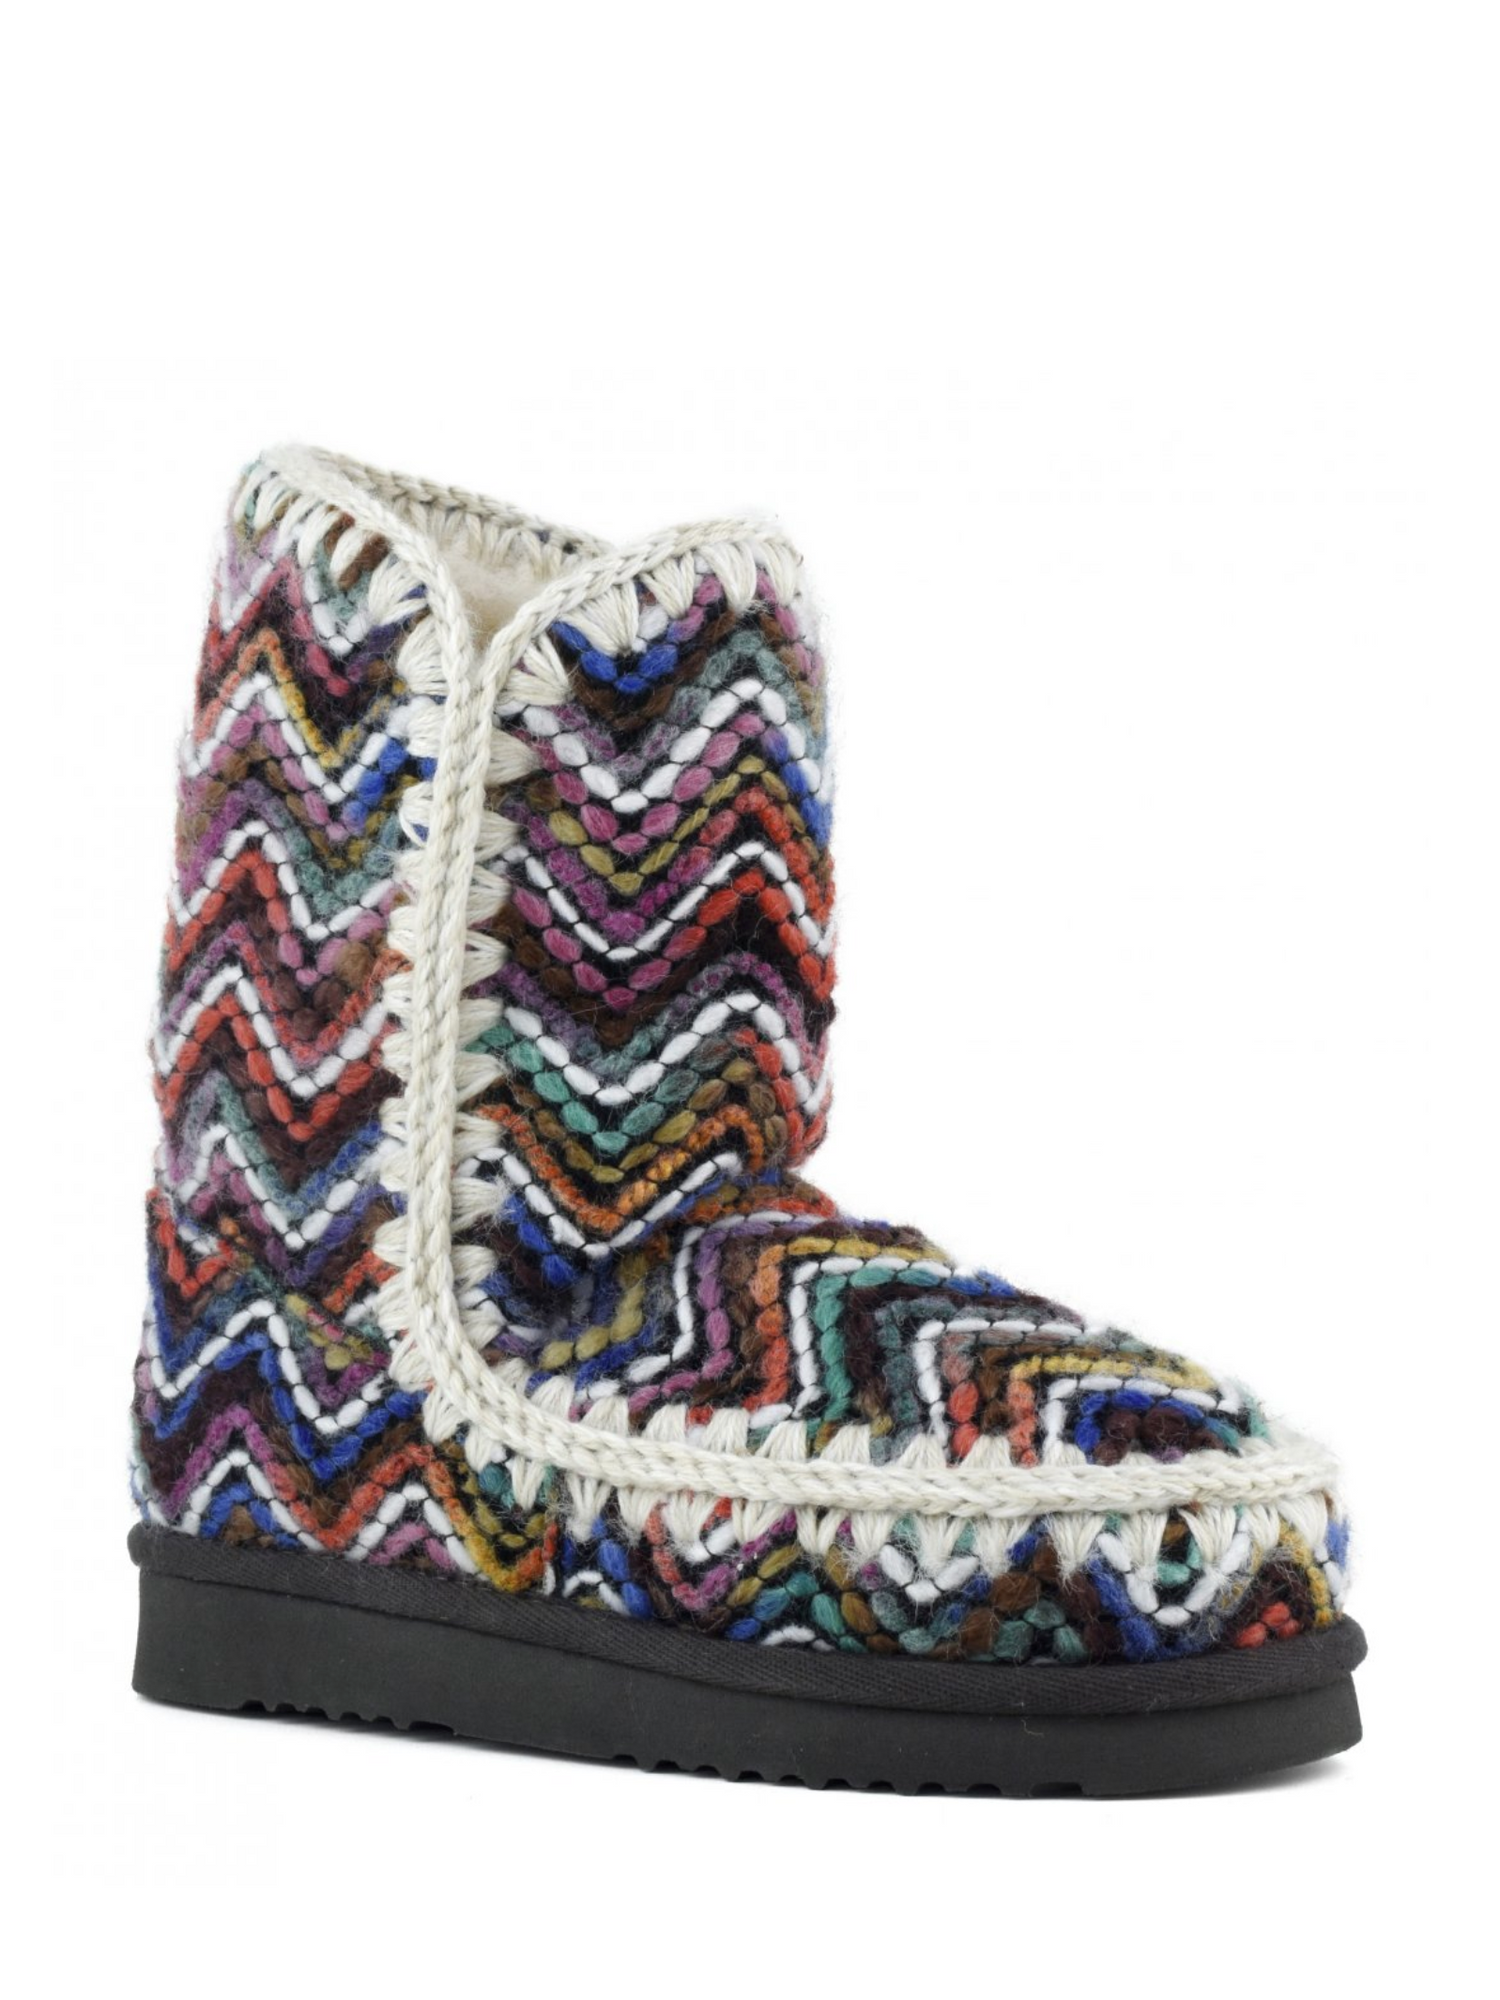 Eskimo 24 boots, multicoloured wool fabric